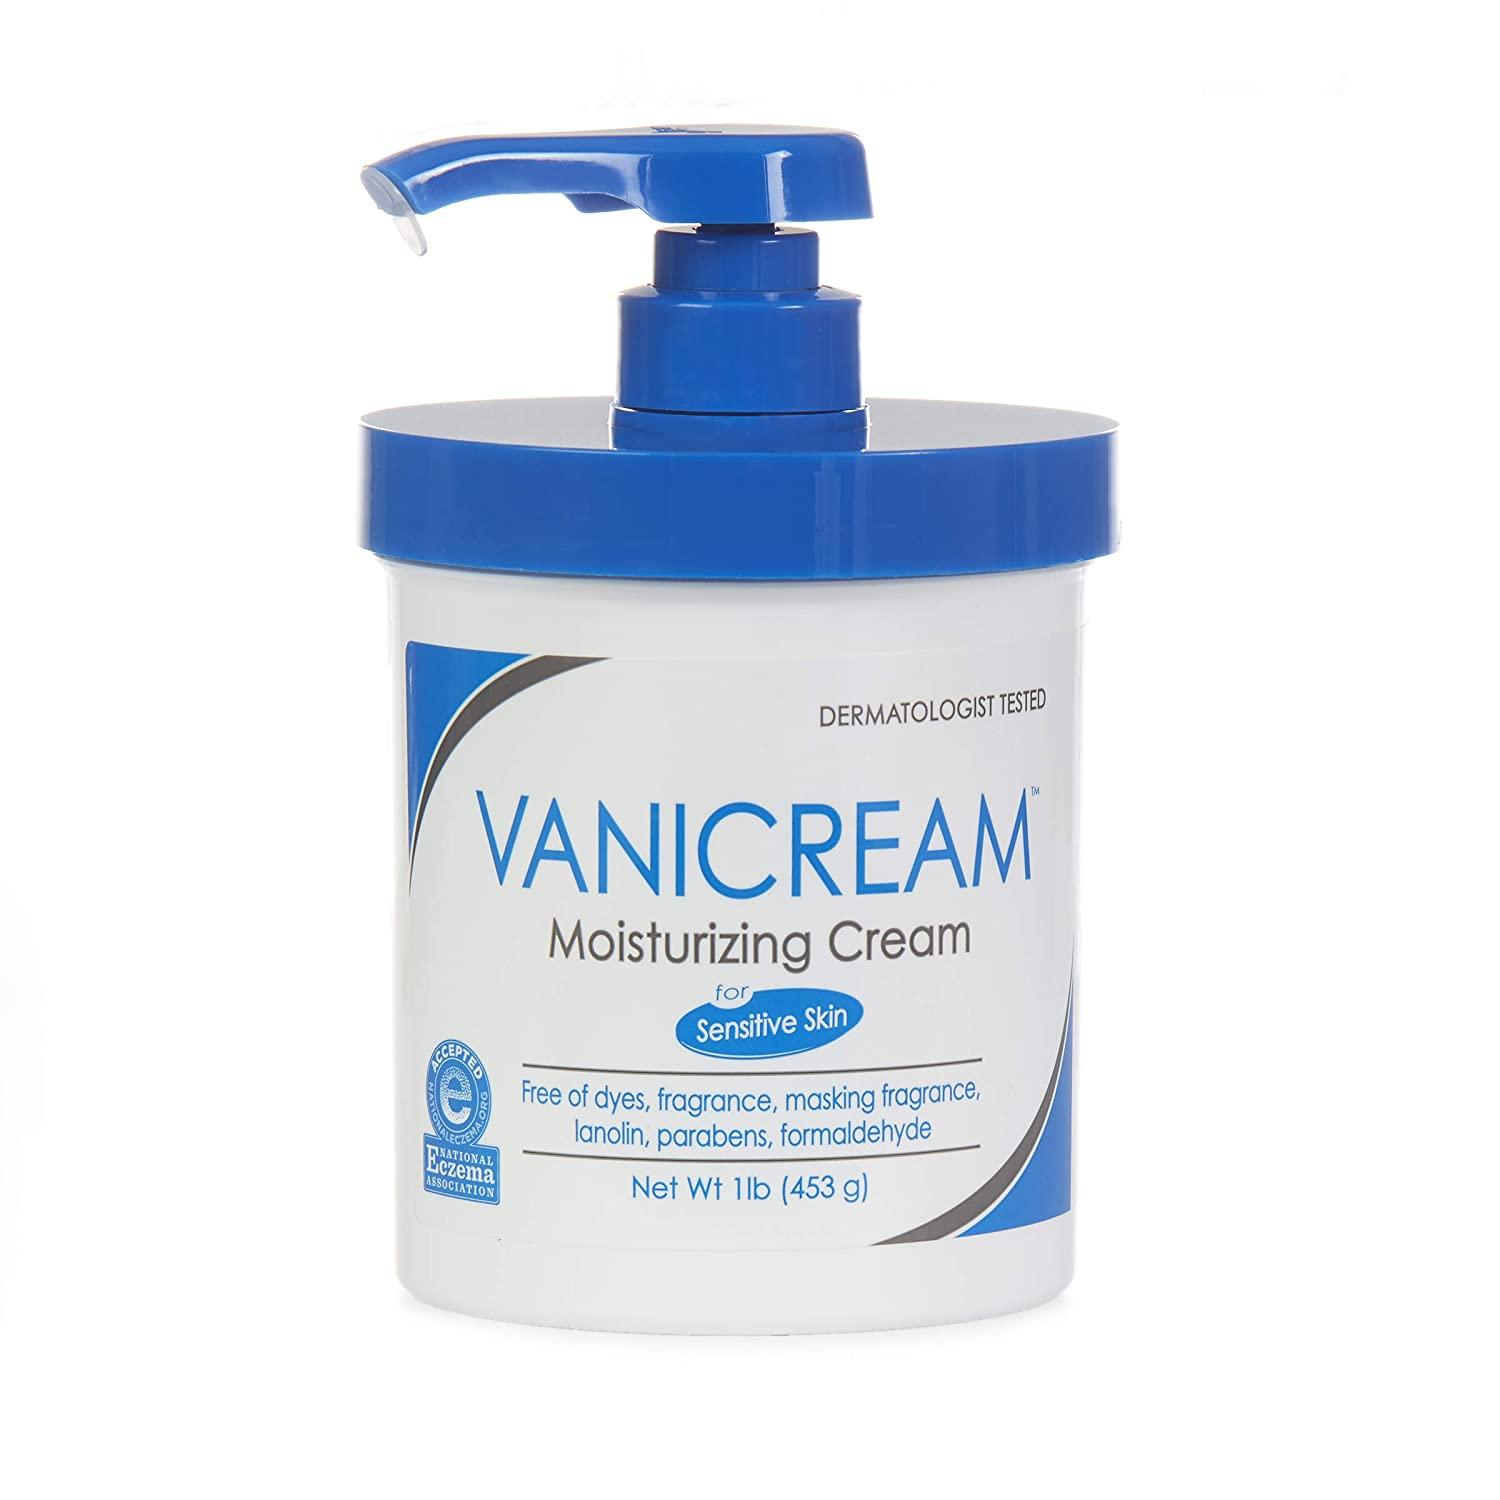 Vanicream Moisturizing Cream with Pump for $6.91 Shipped